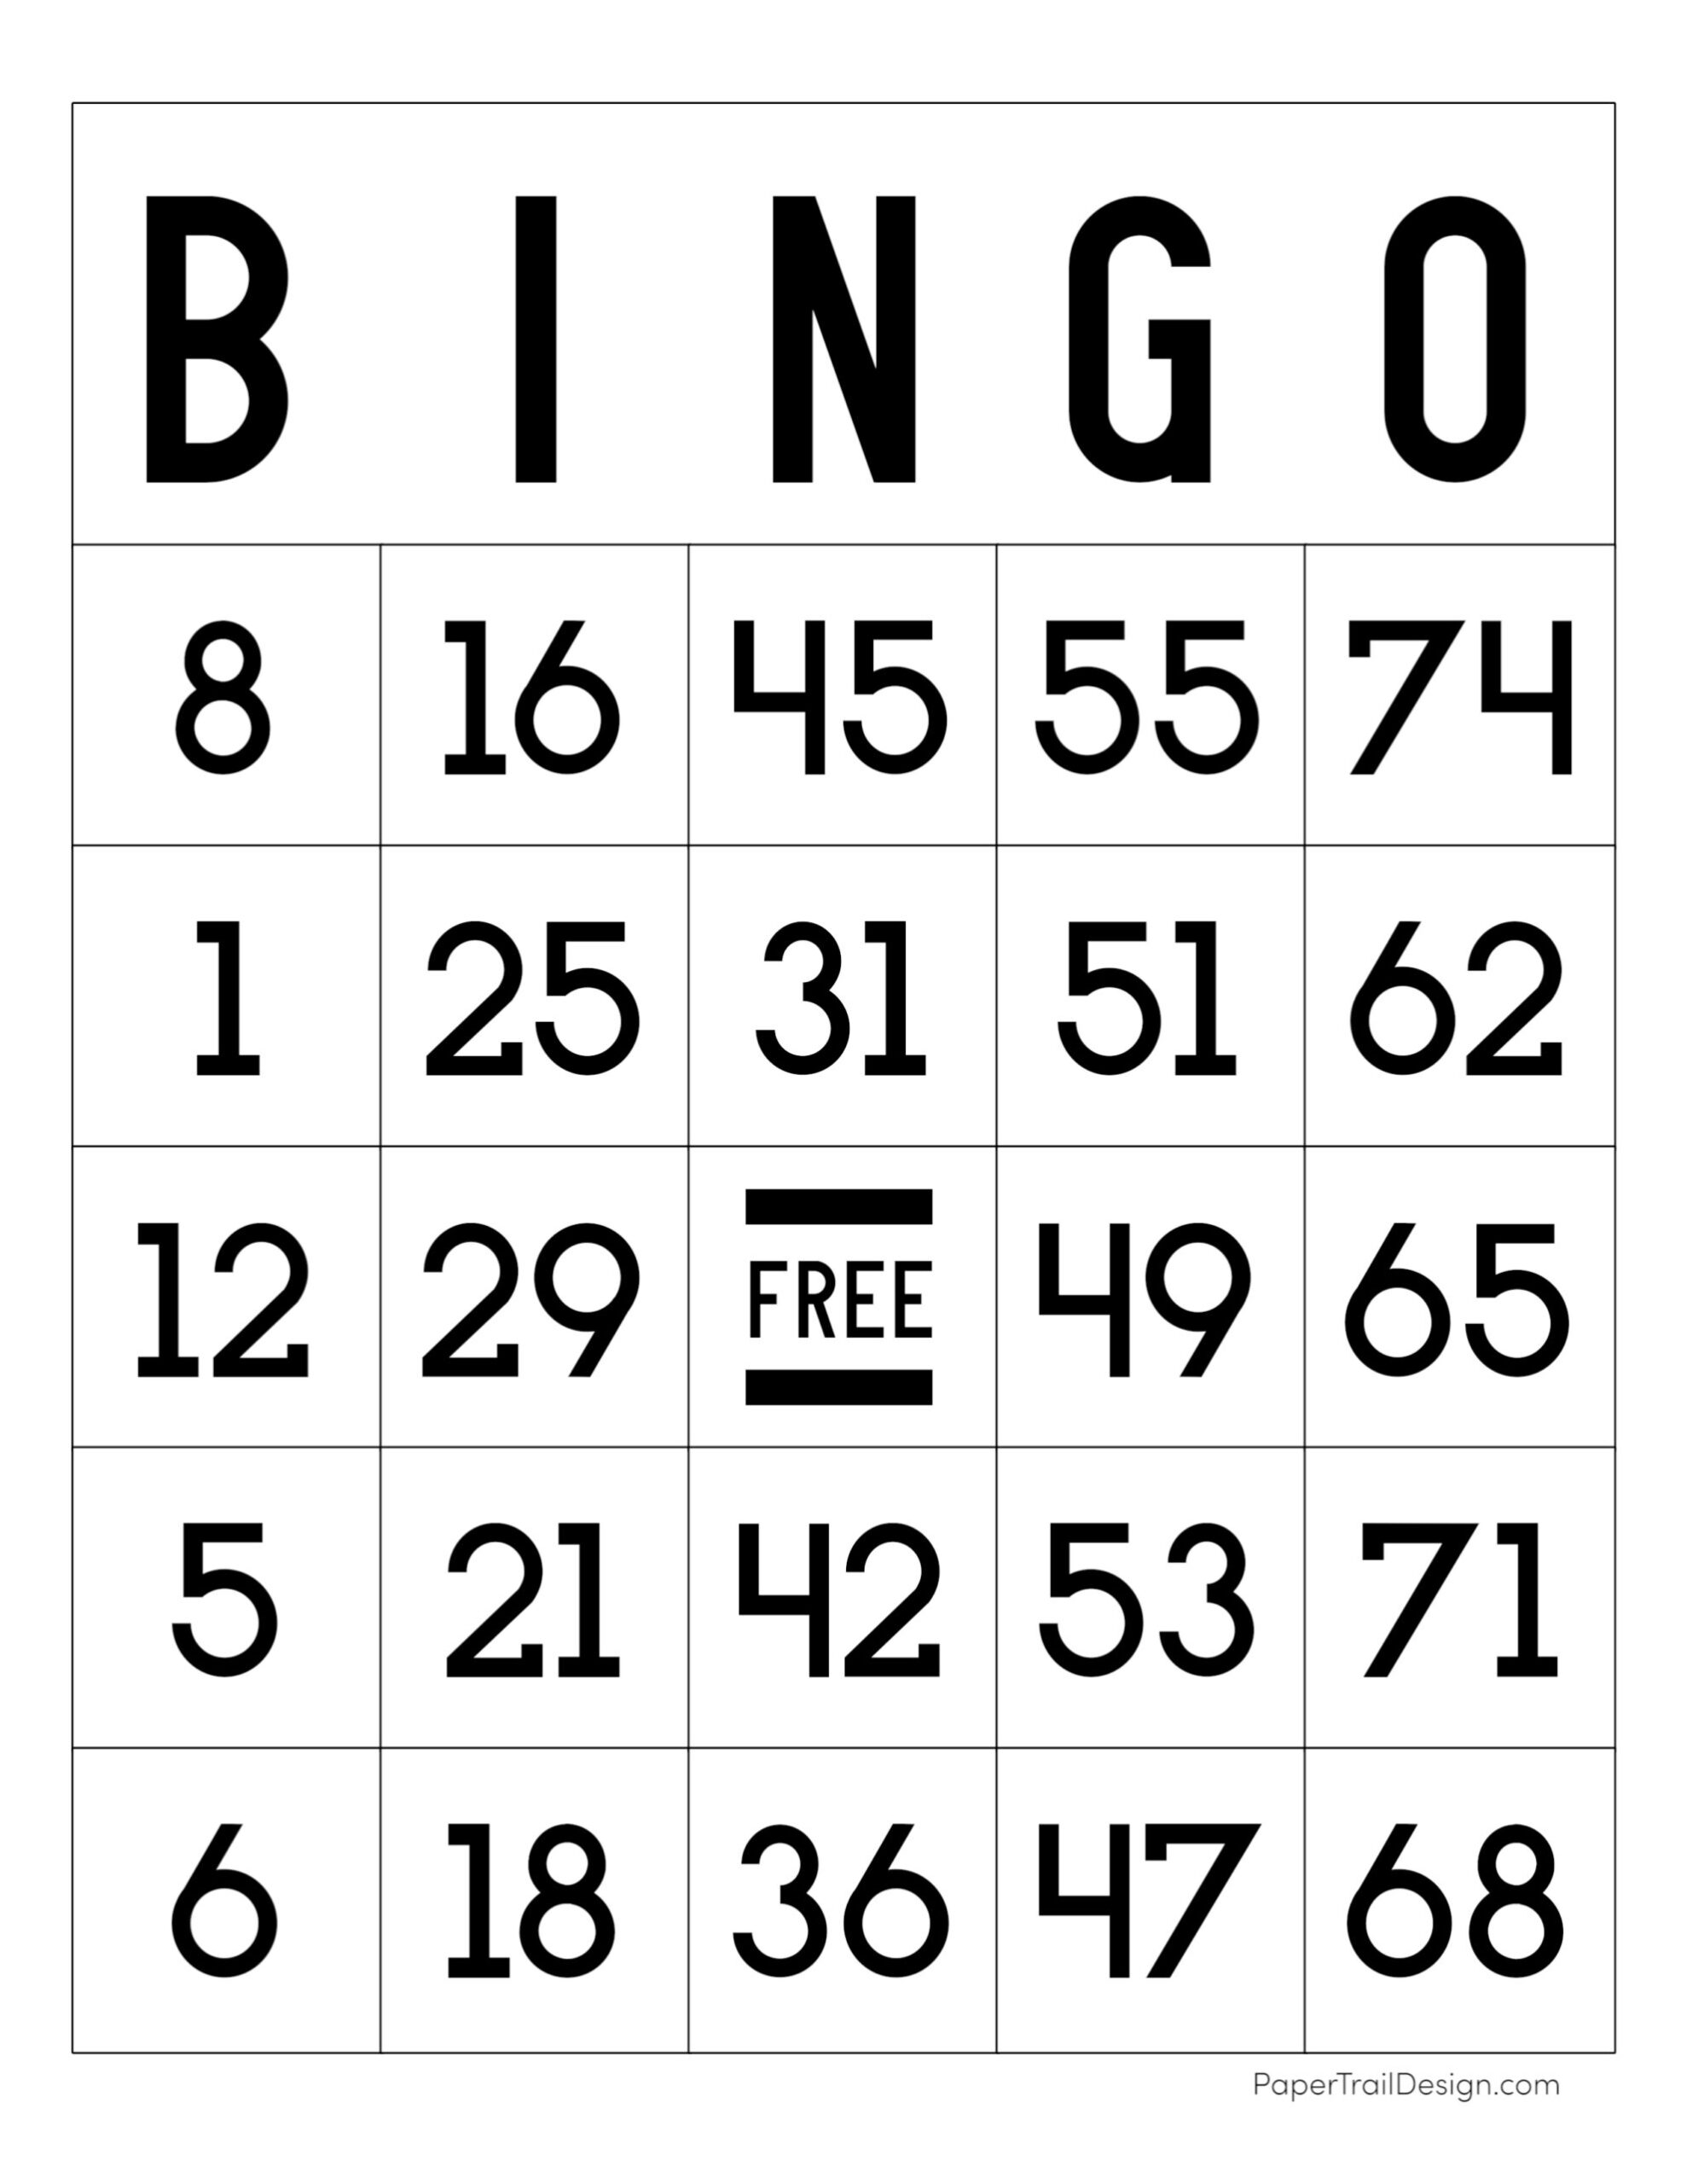 Free Printable Bingo Cards - Paper Trail Design regarding Free Bingo Printable